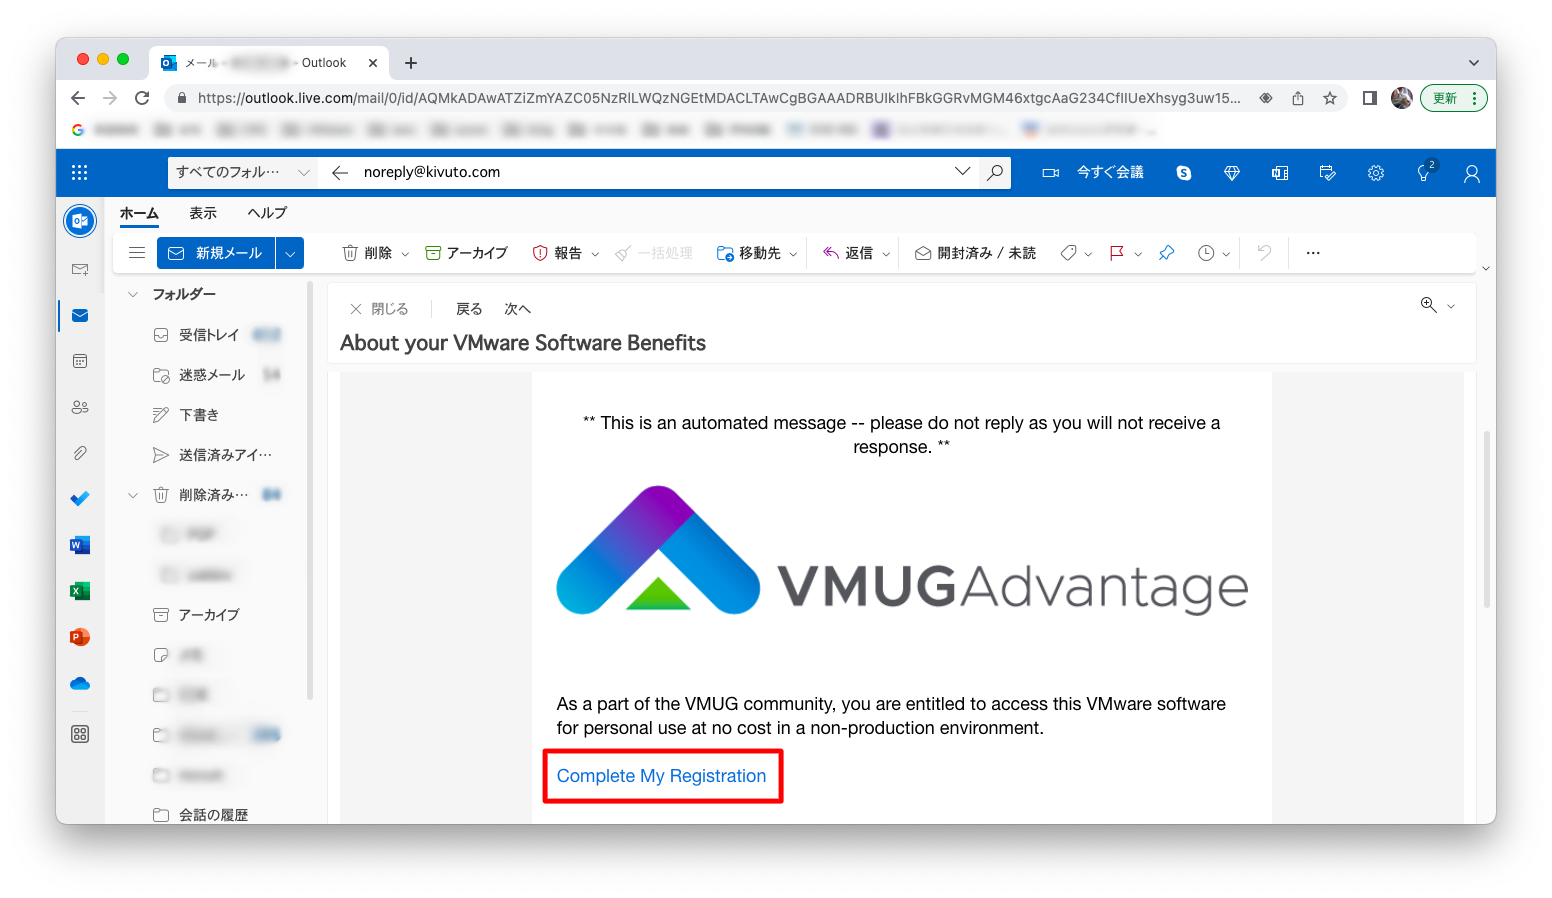 VMUG 登録完了の催促メール